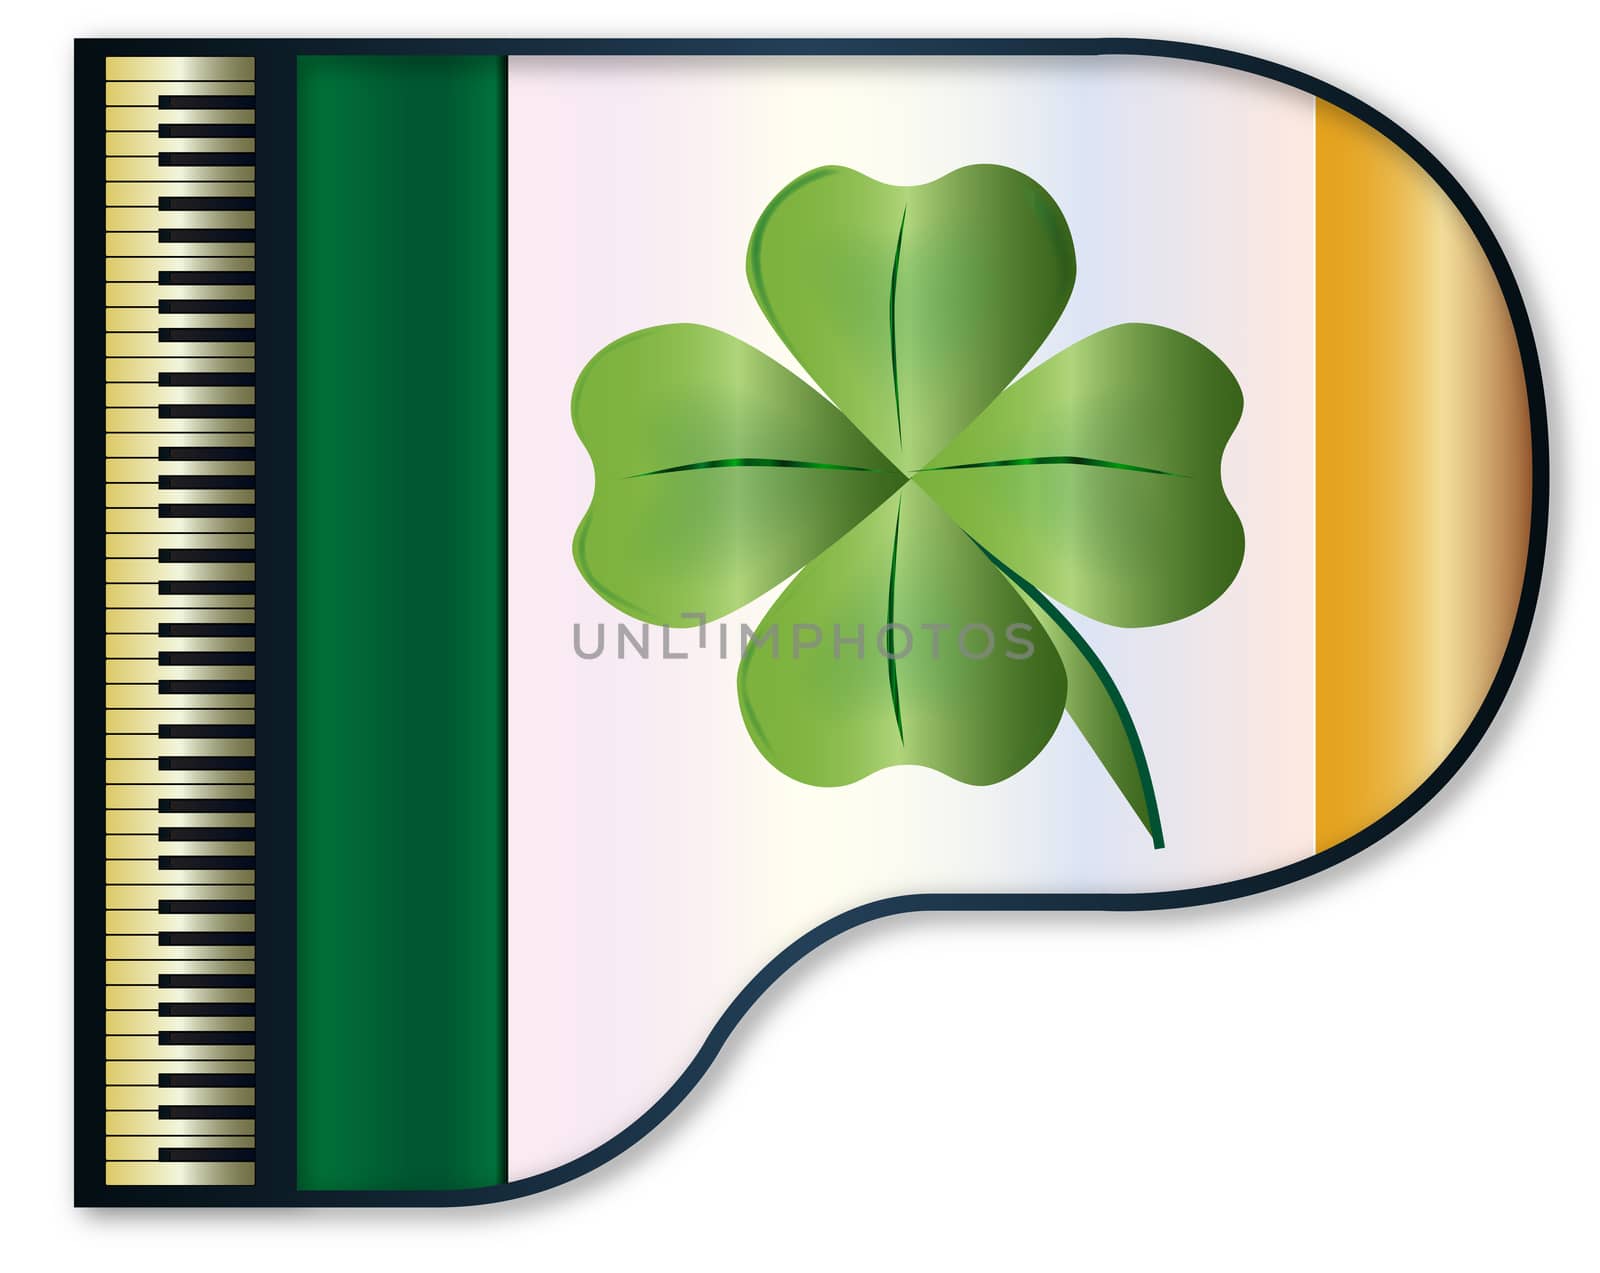 The Irish flag set into a traditional black grand piano